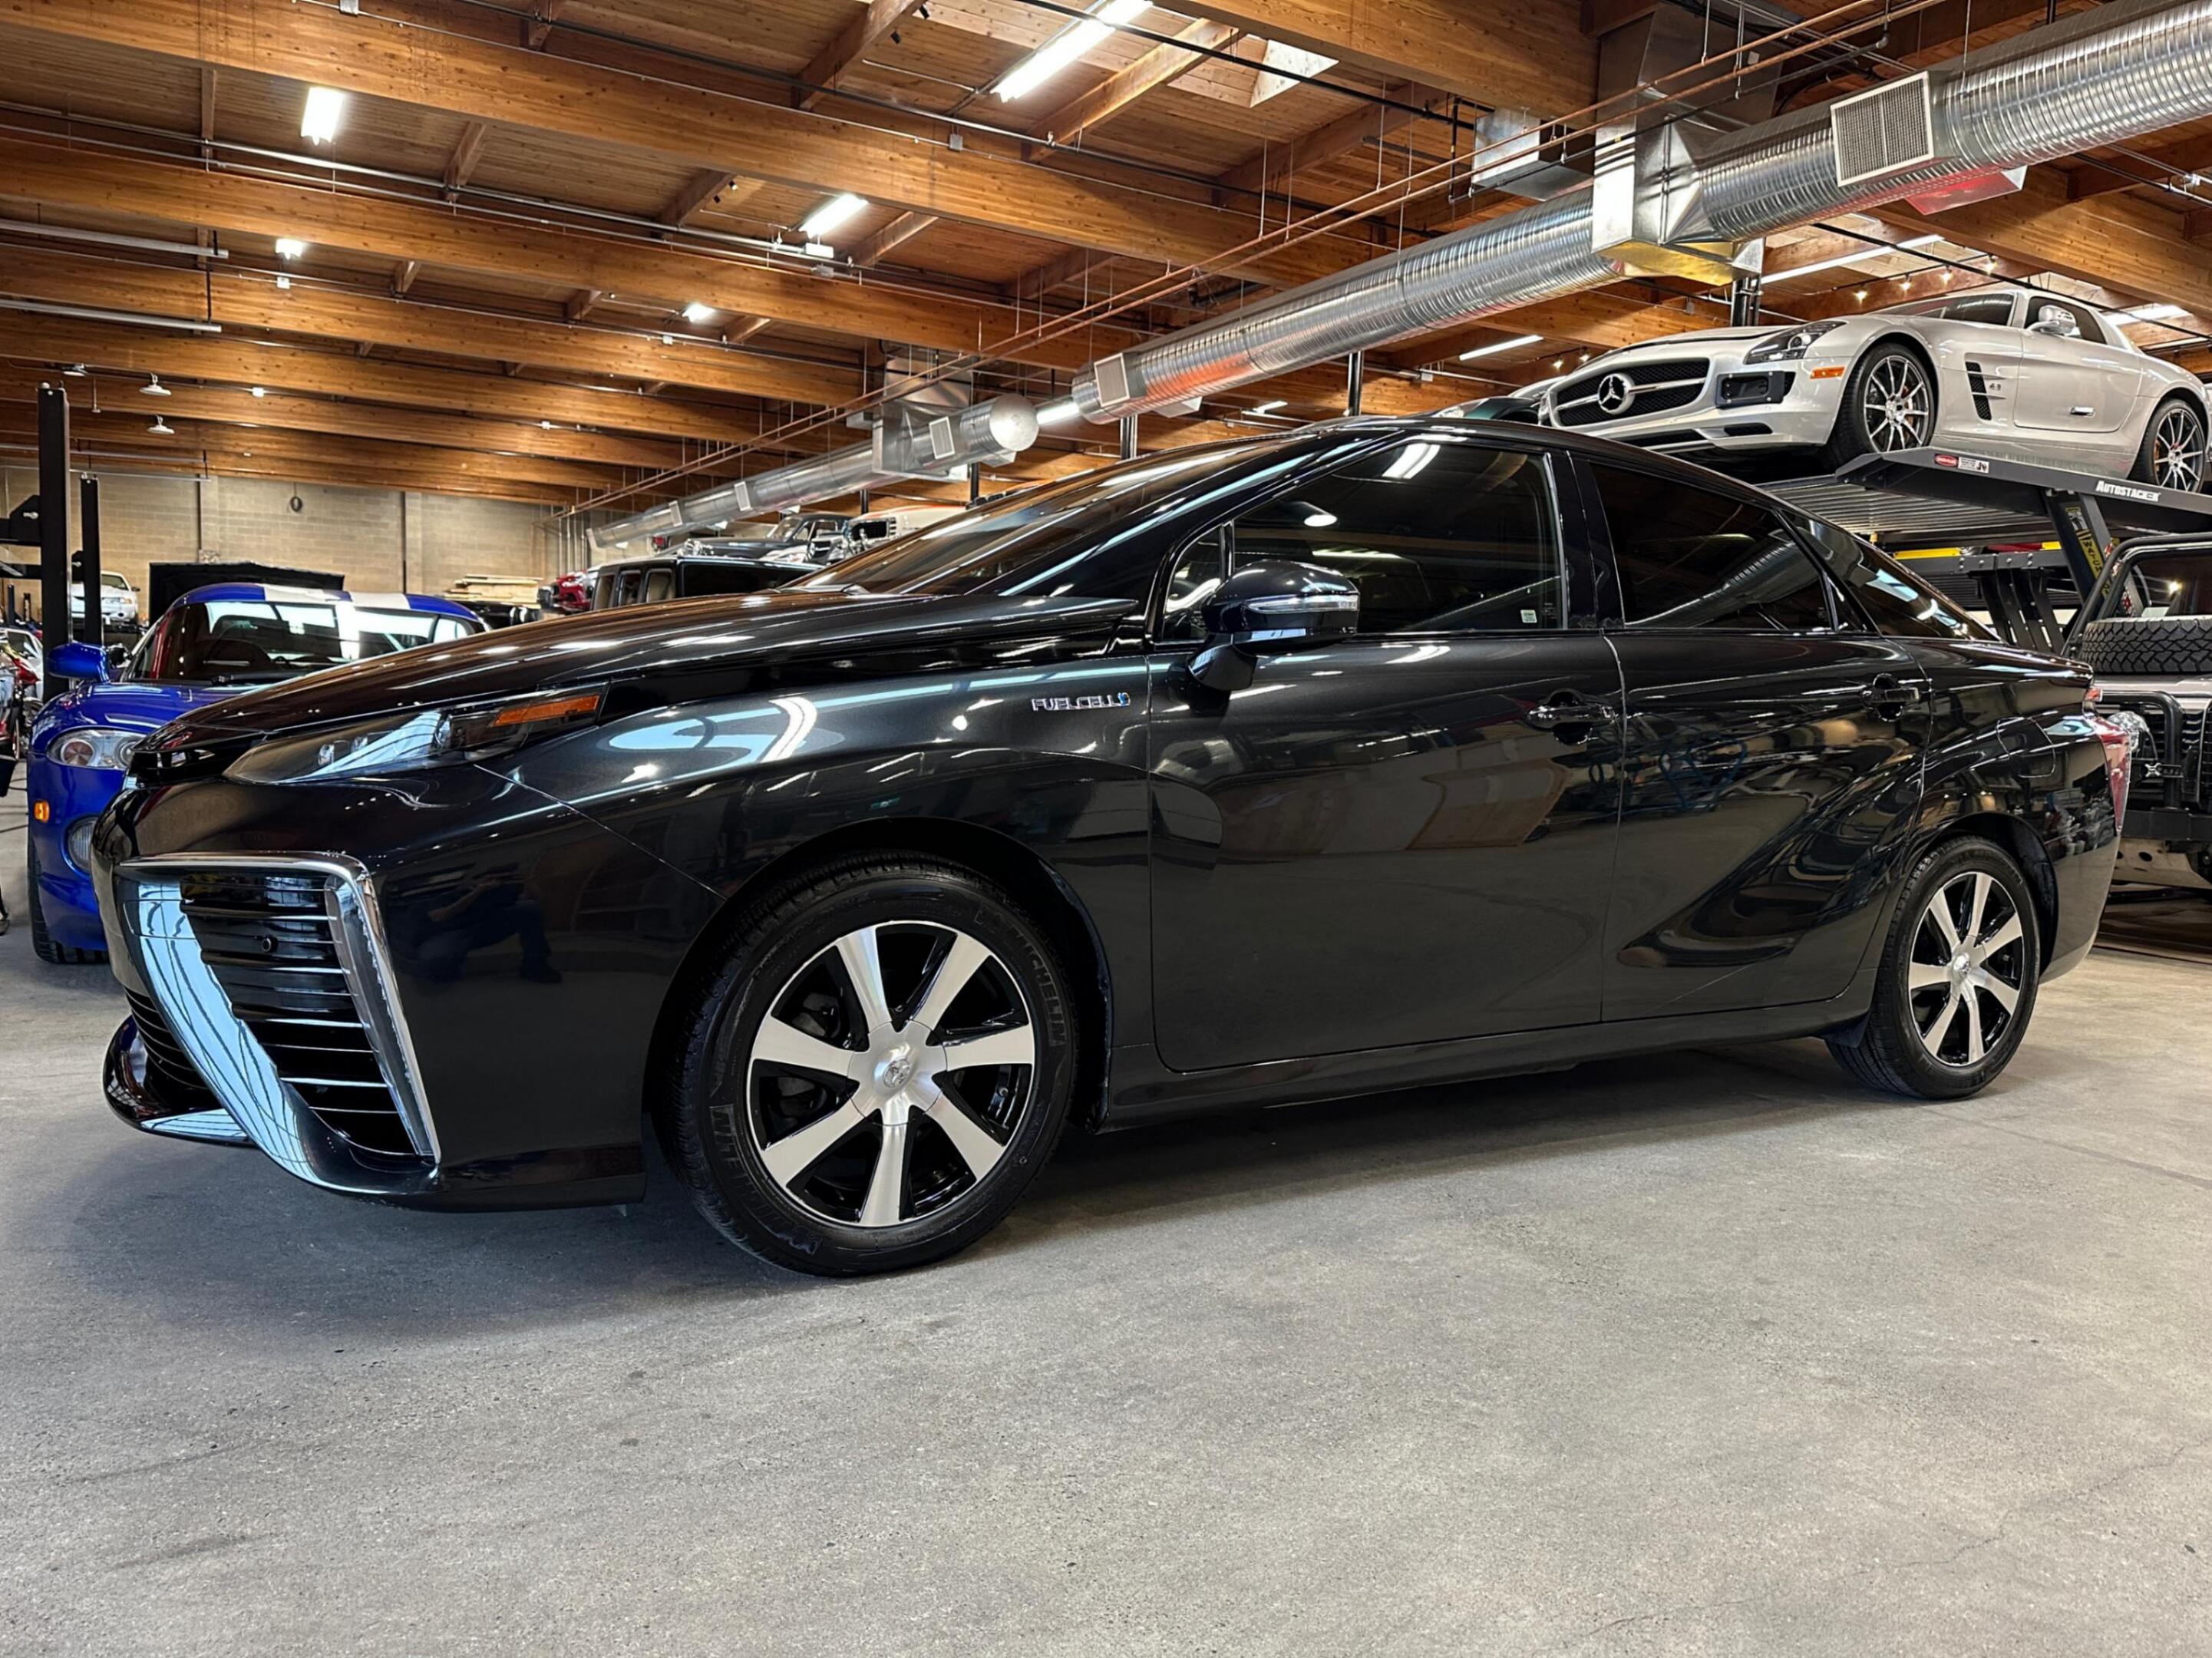 2019 Toyota Mirai Hydrogen Fuel Cell